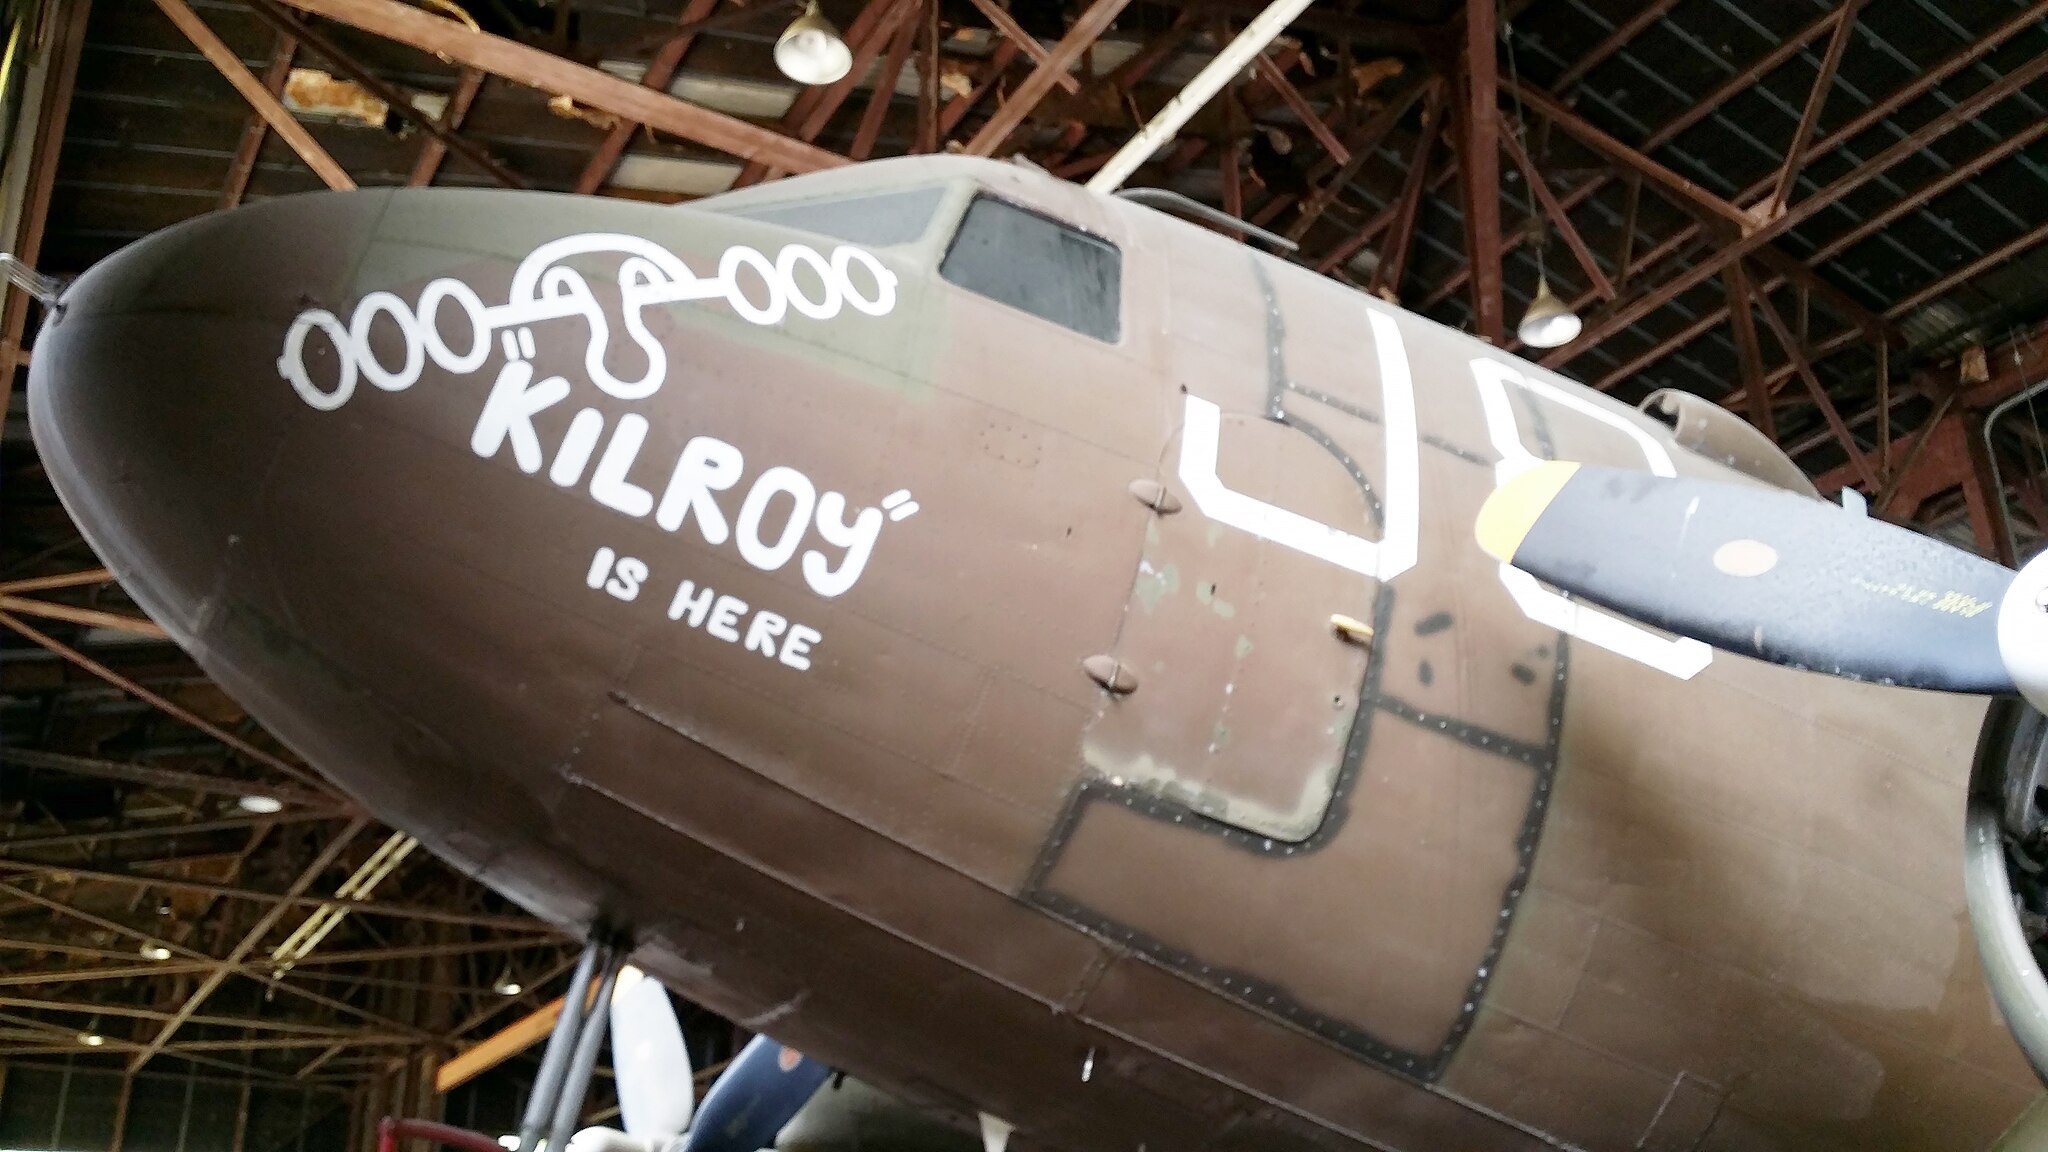 Douglas C-47D Skytrain Kilroy is here